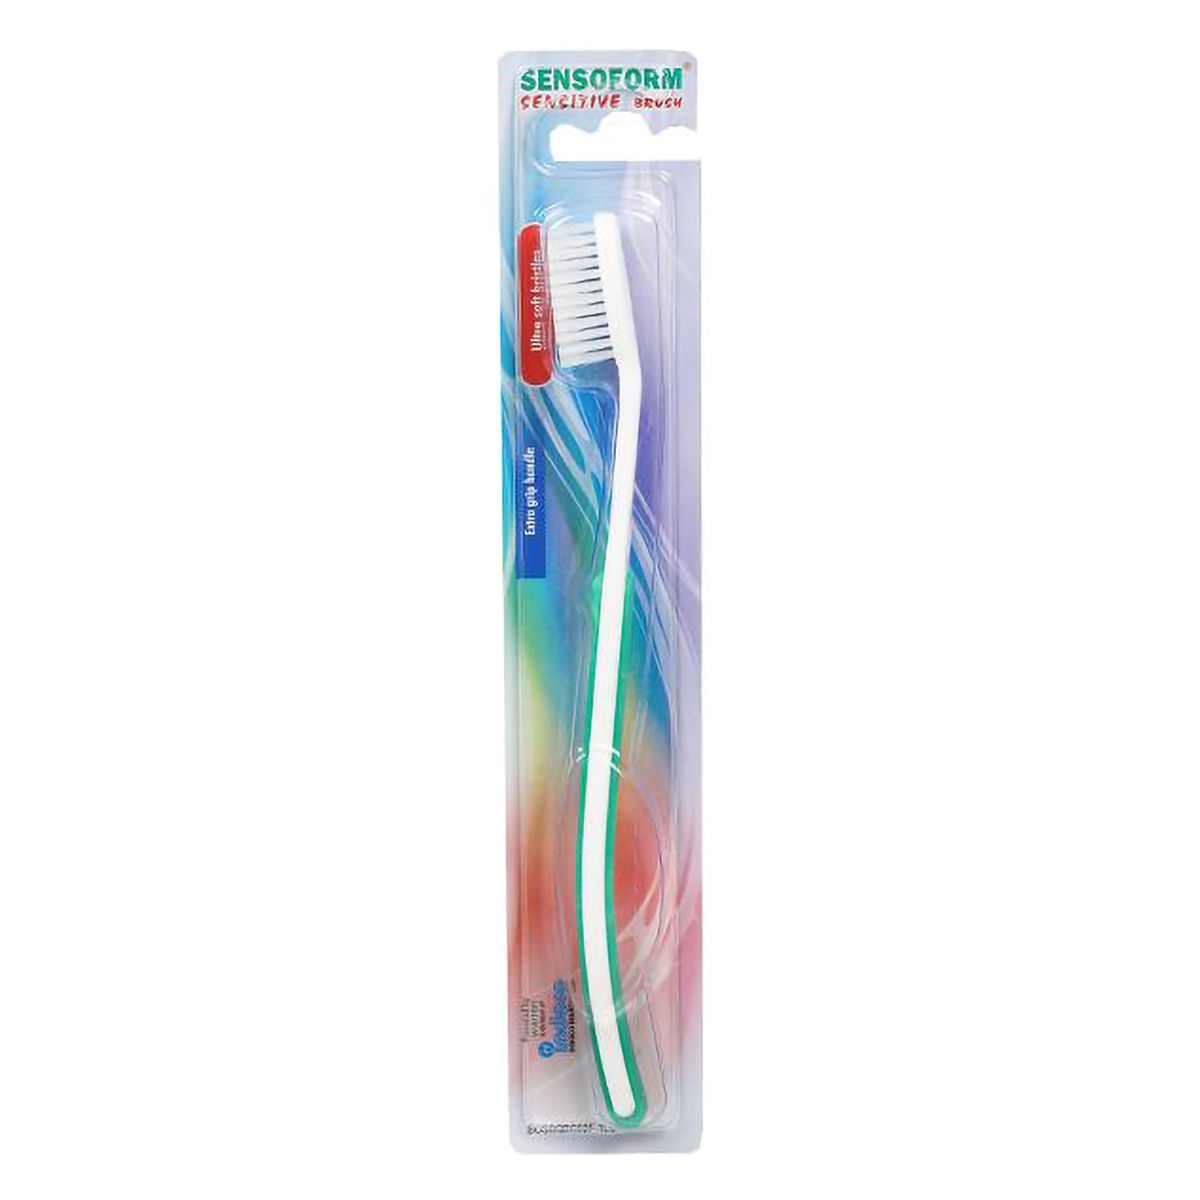 Buy Sensoform Sensitive Toothbrush, 1 Count Online